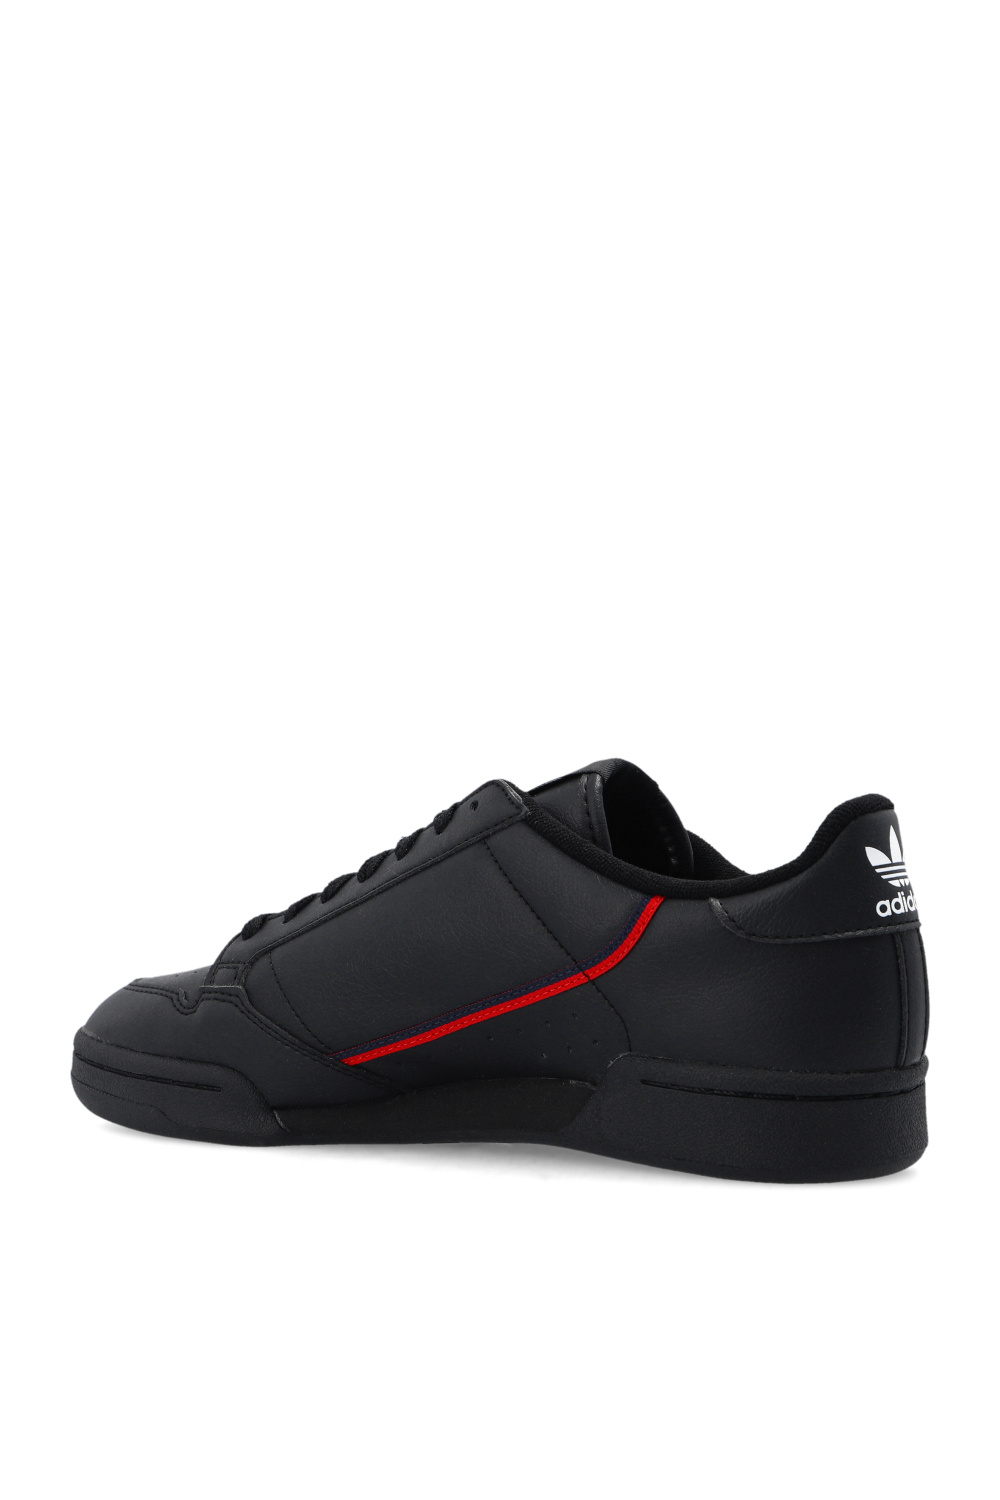 Black \'Continental 80 Vegan\' sneakers ADIDAS Originals - Vitkac Canada